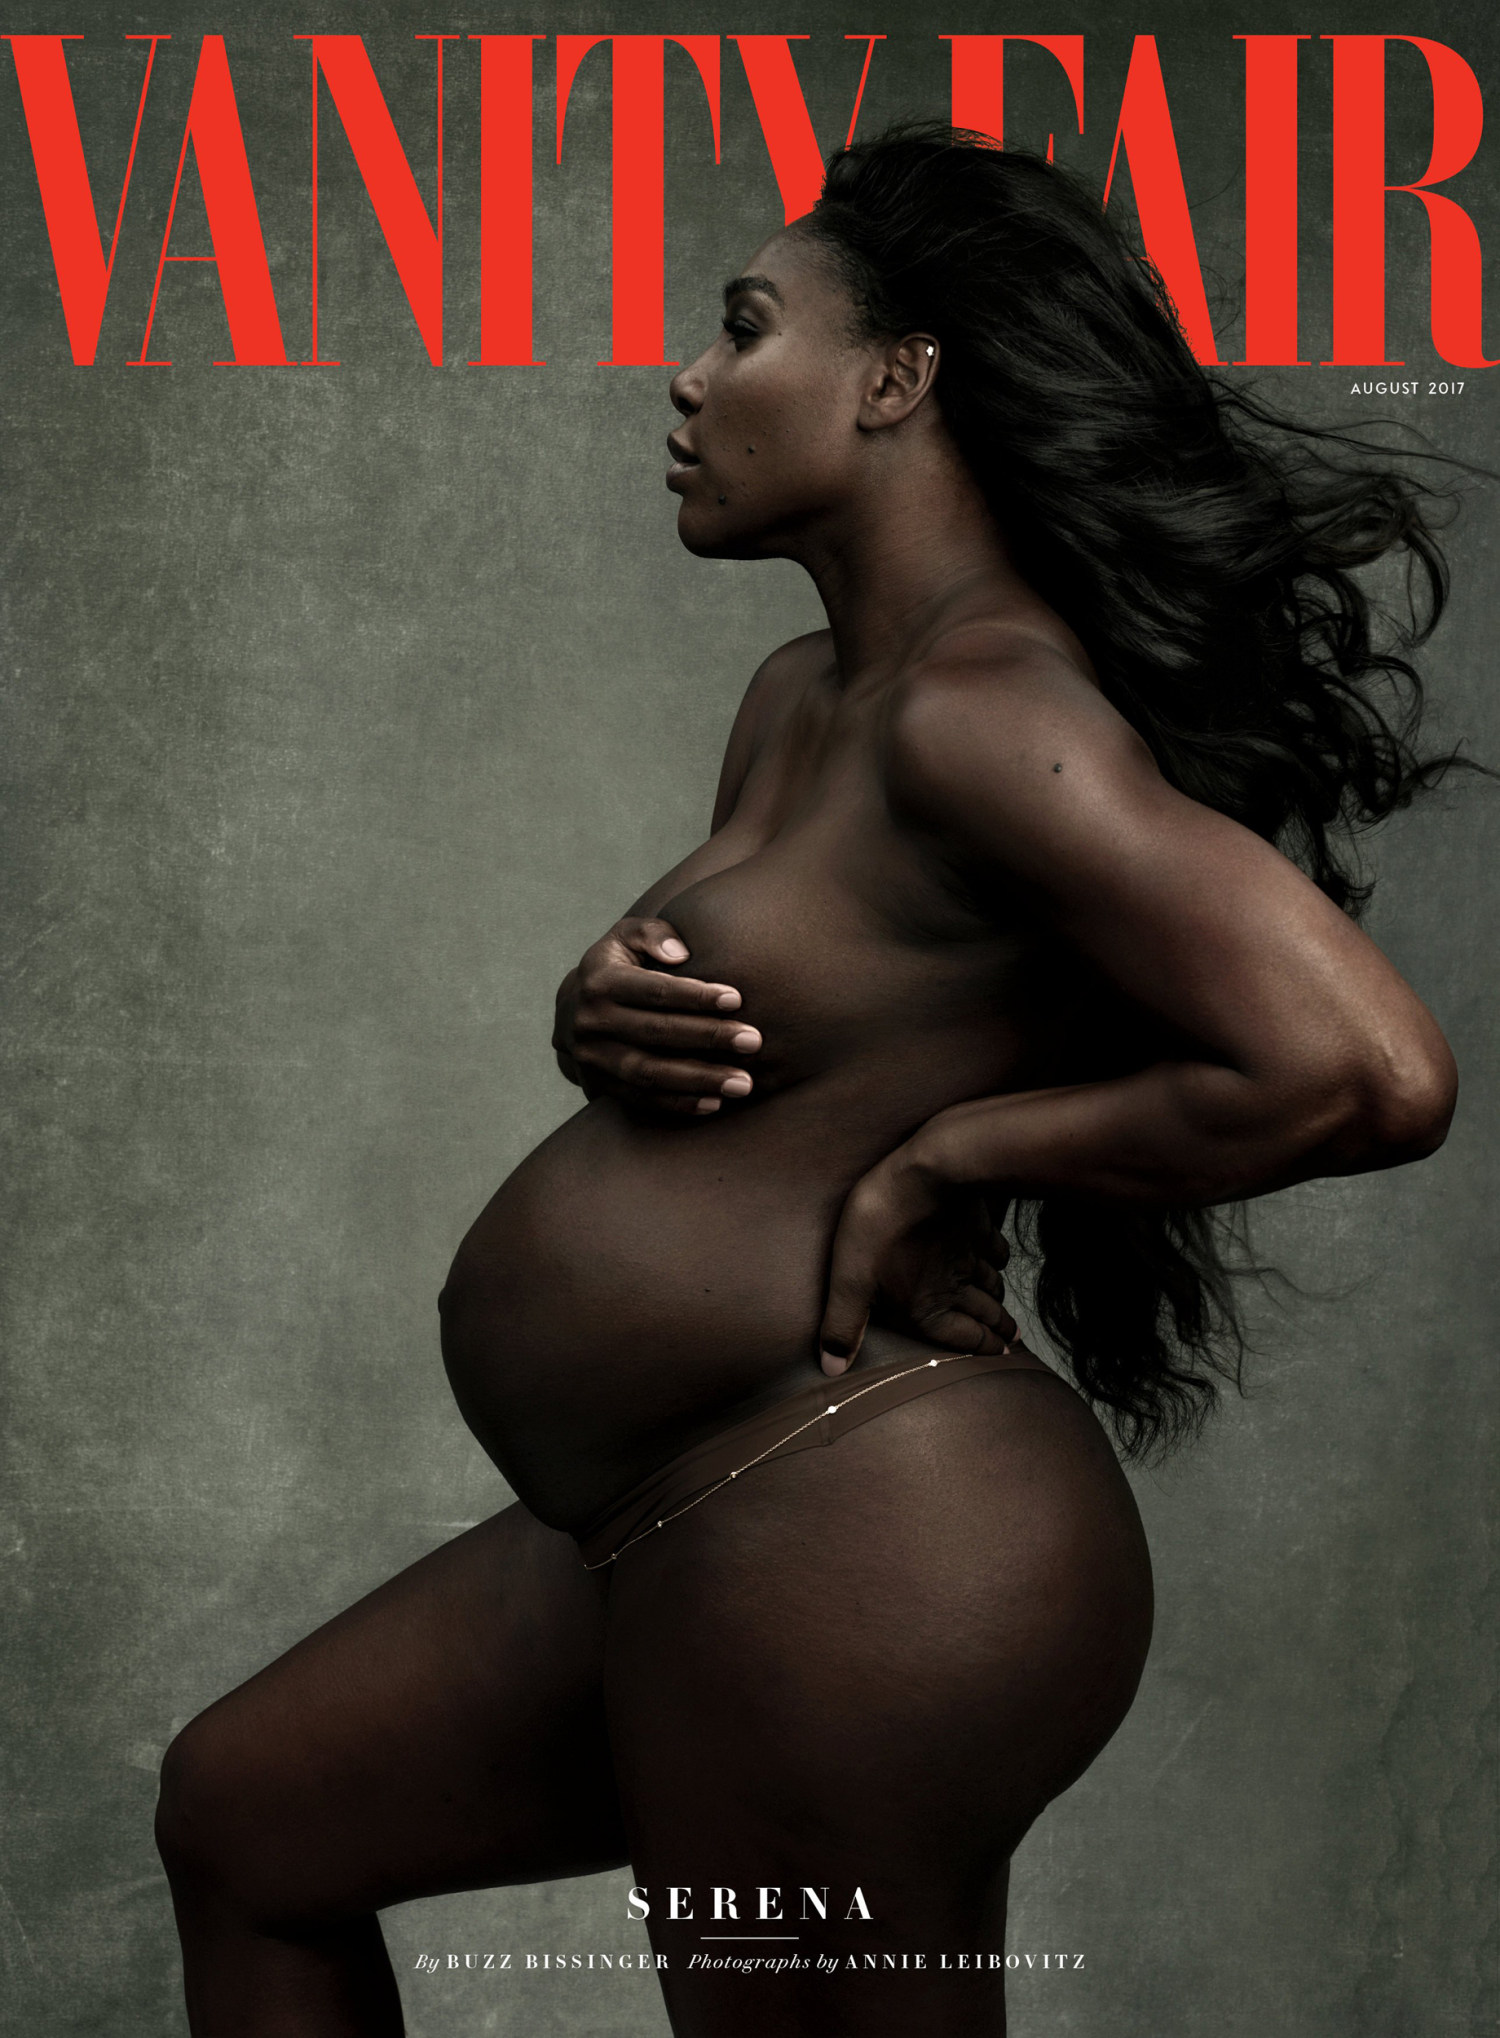 Serena William Porn Video - Pregnant Serena Williams Poses Nude for Vanity Fair Cover